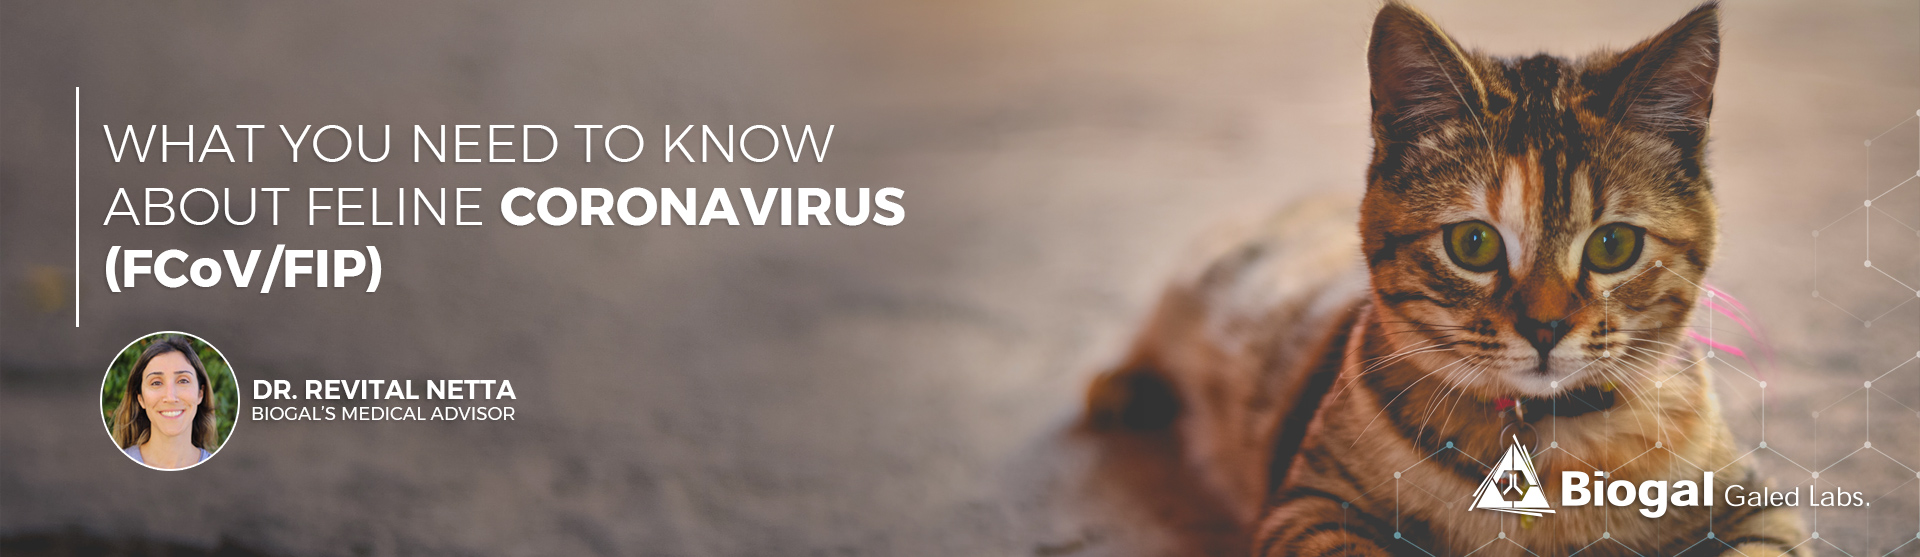 Top 3 Covid 19 Coronavirus Myths Busted Iqair